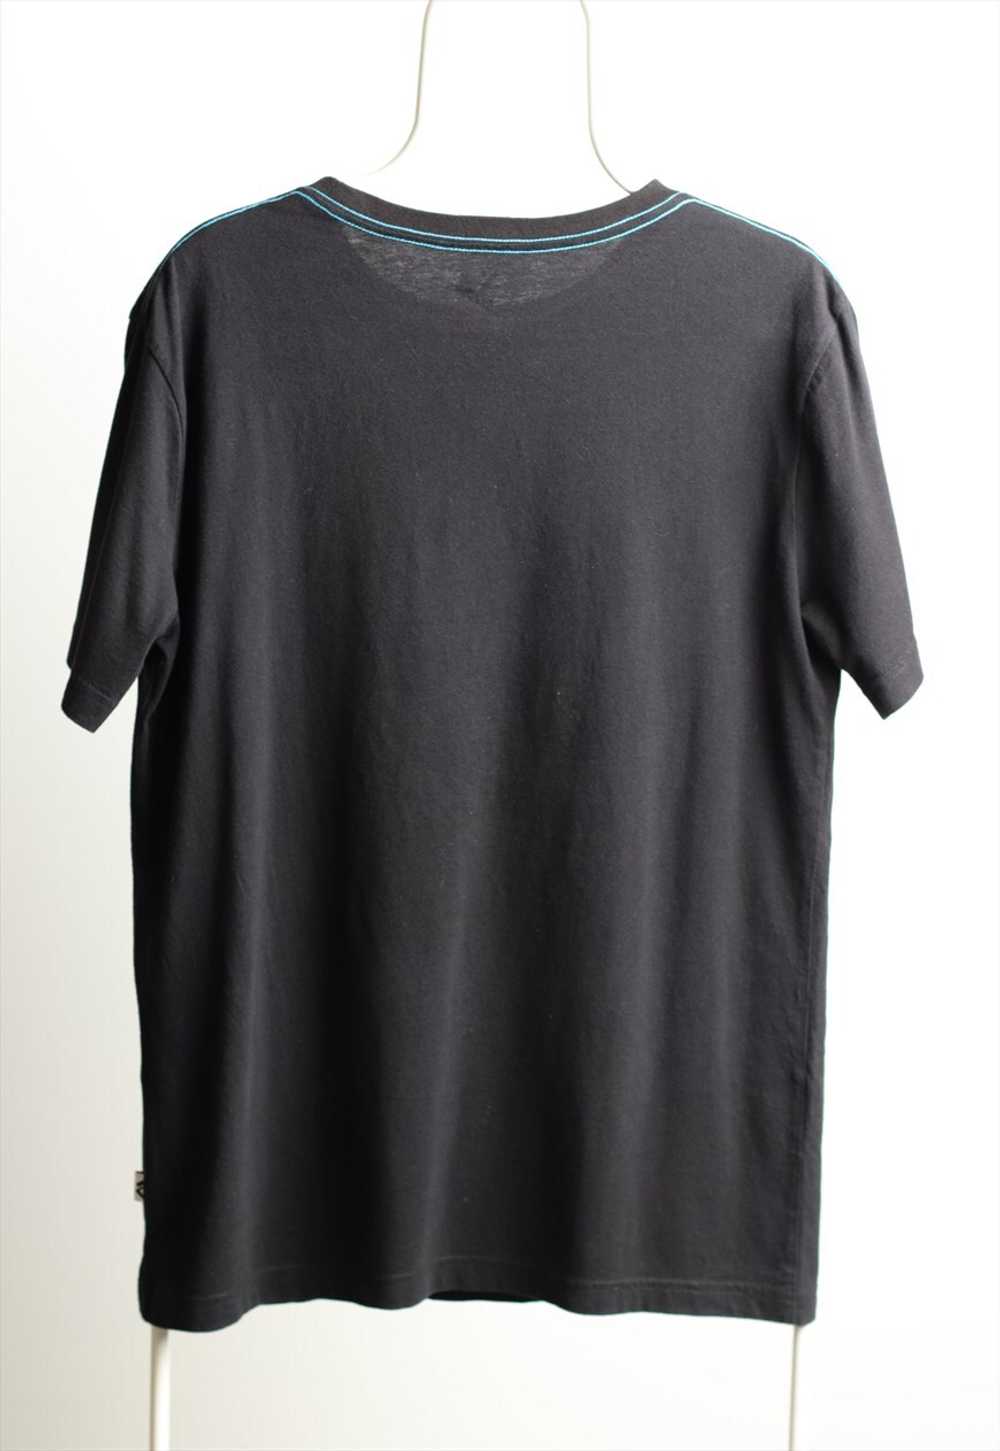 Shaun White Vintage Crewneck Graphic T-shirt Blac… - image 2